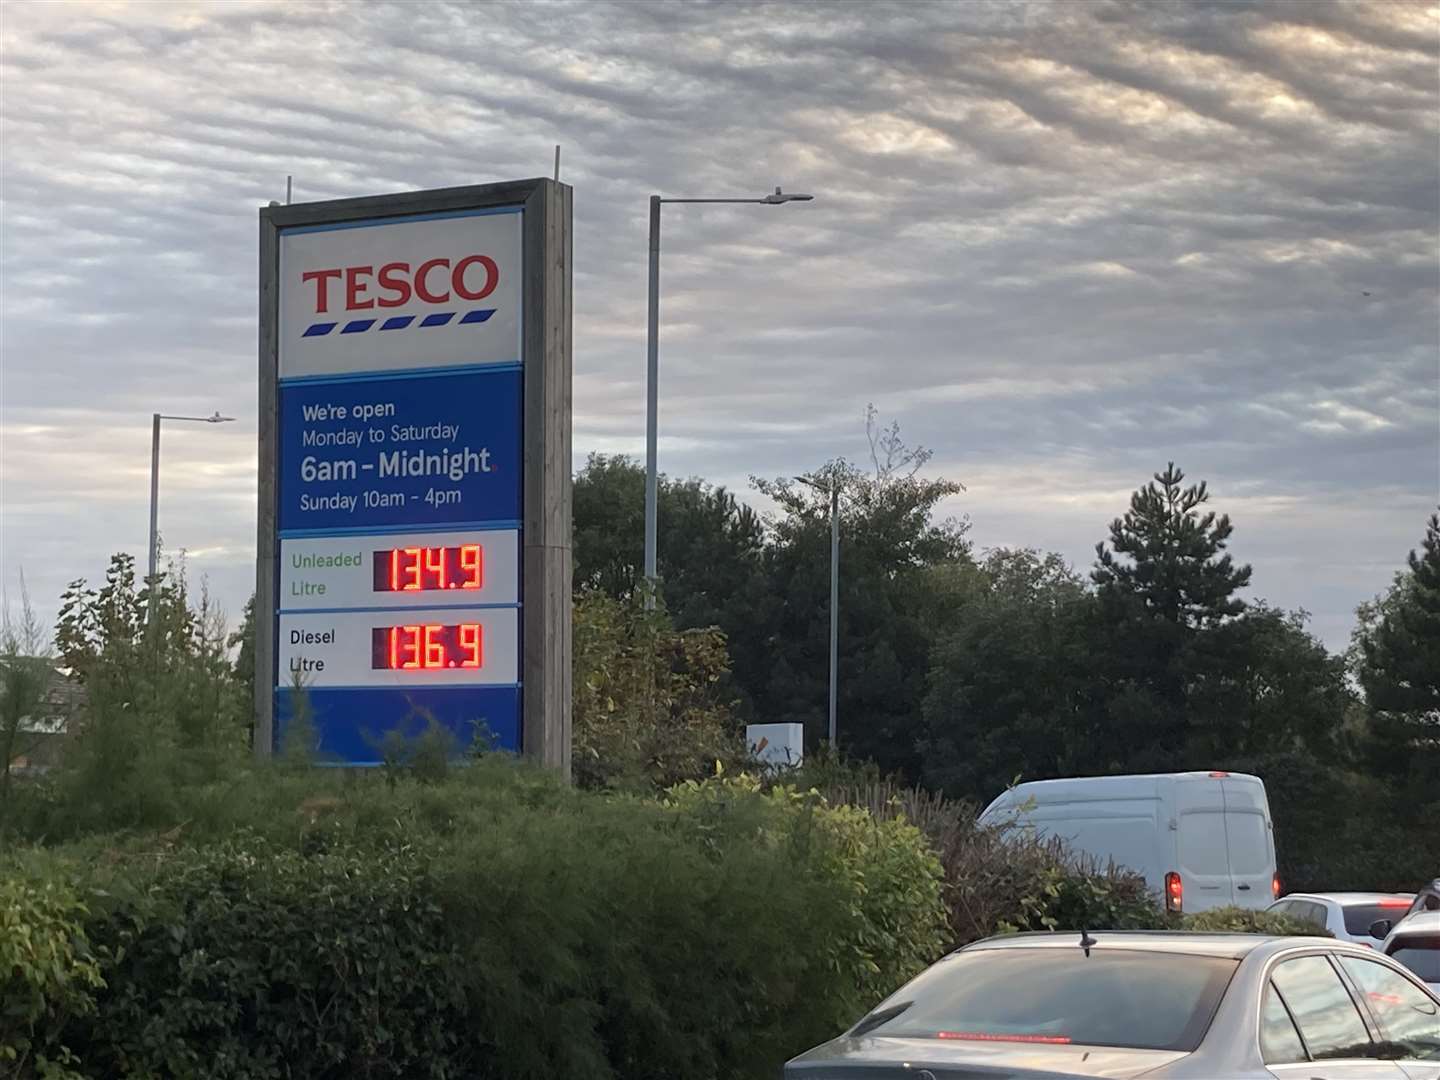 Bargain fuel at Tesco, Sheerness